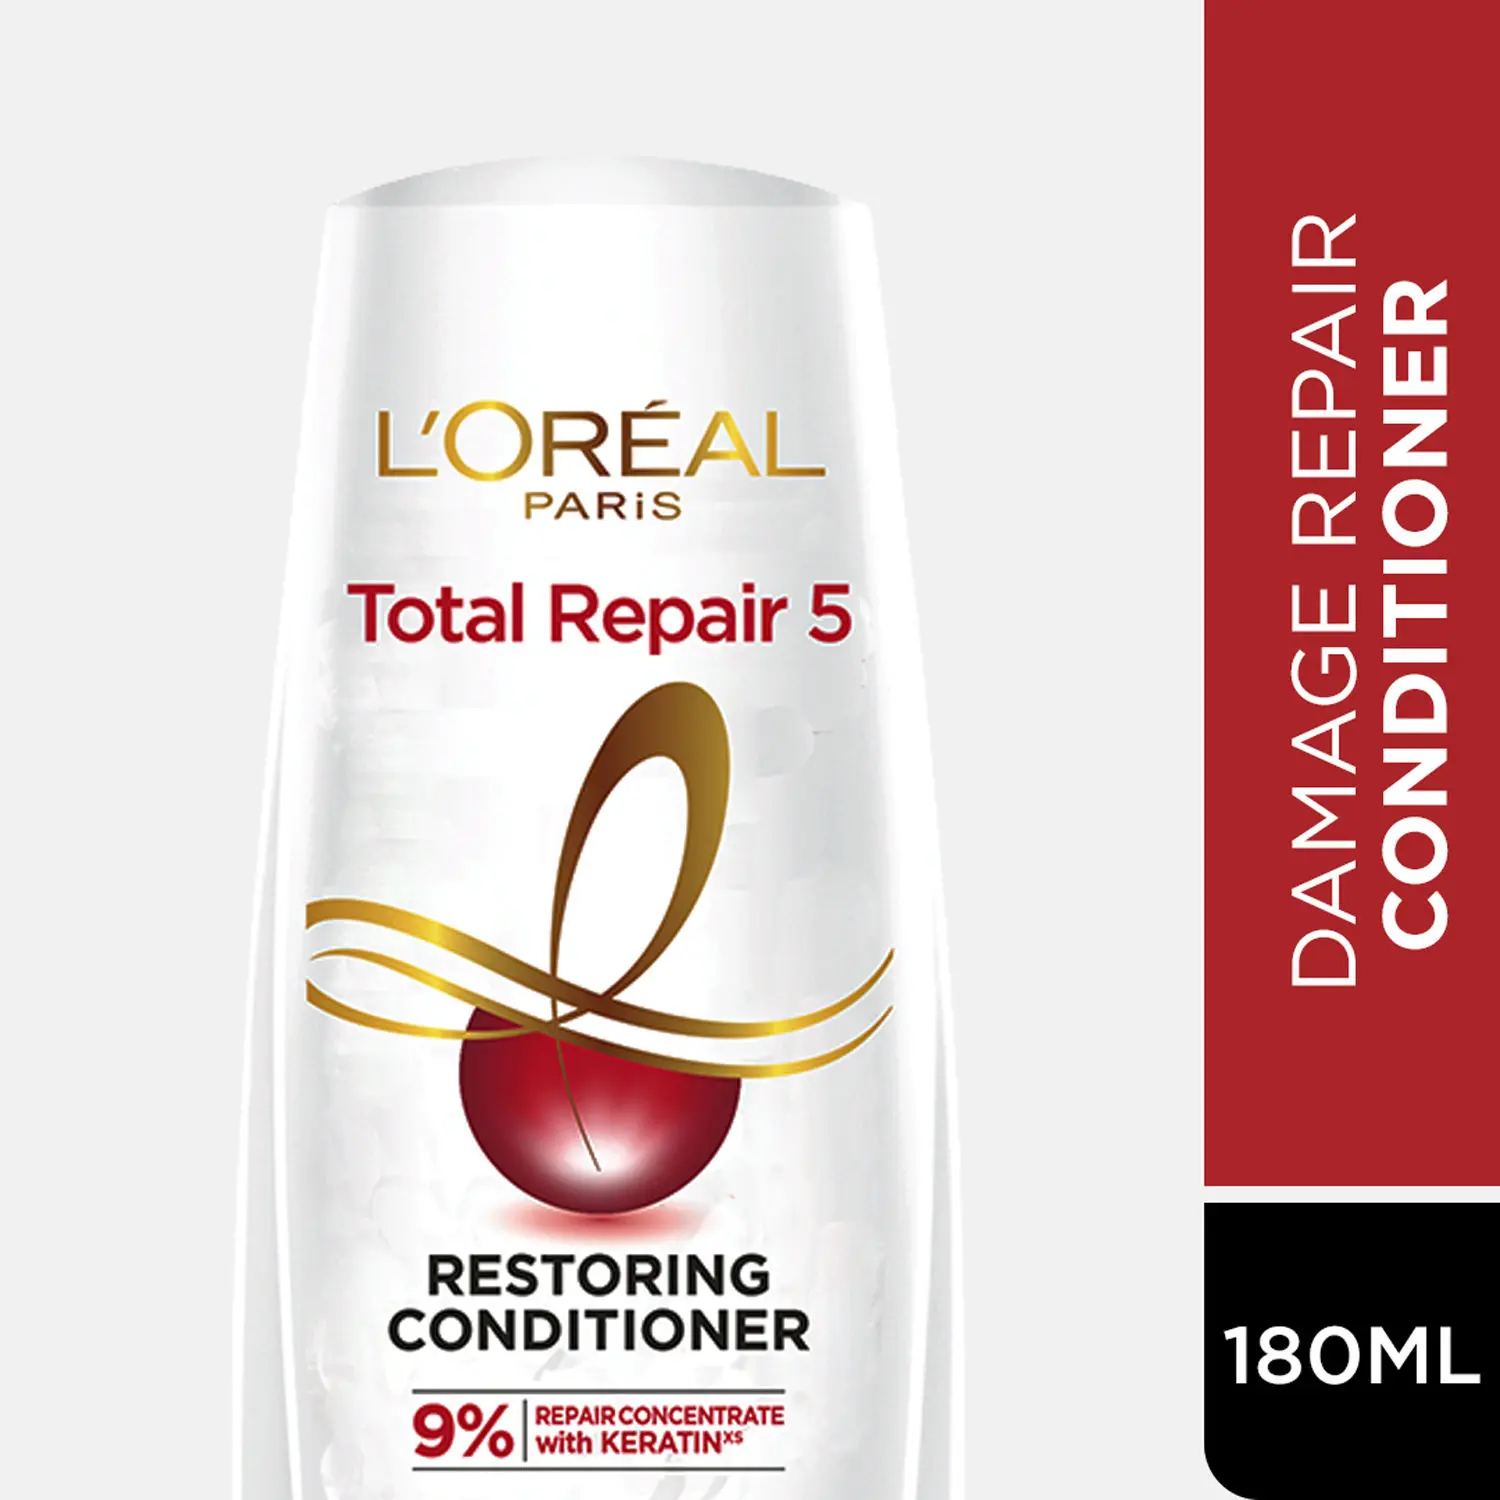 L'Oreal Paris Total Repair 5 Restoring Conditioner (180 ml)